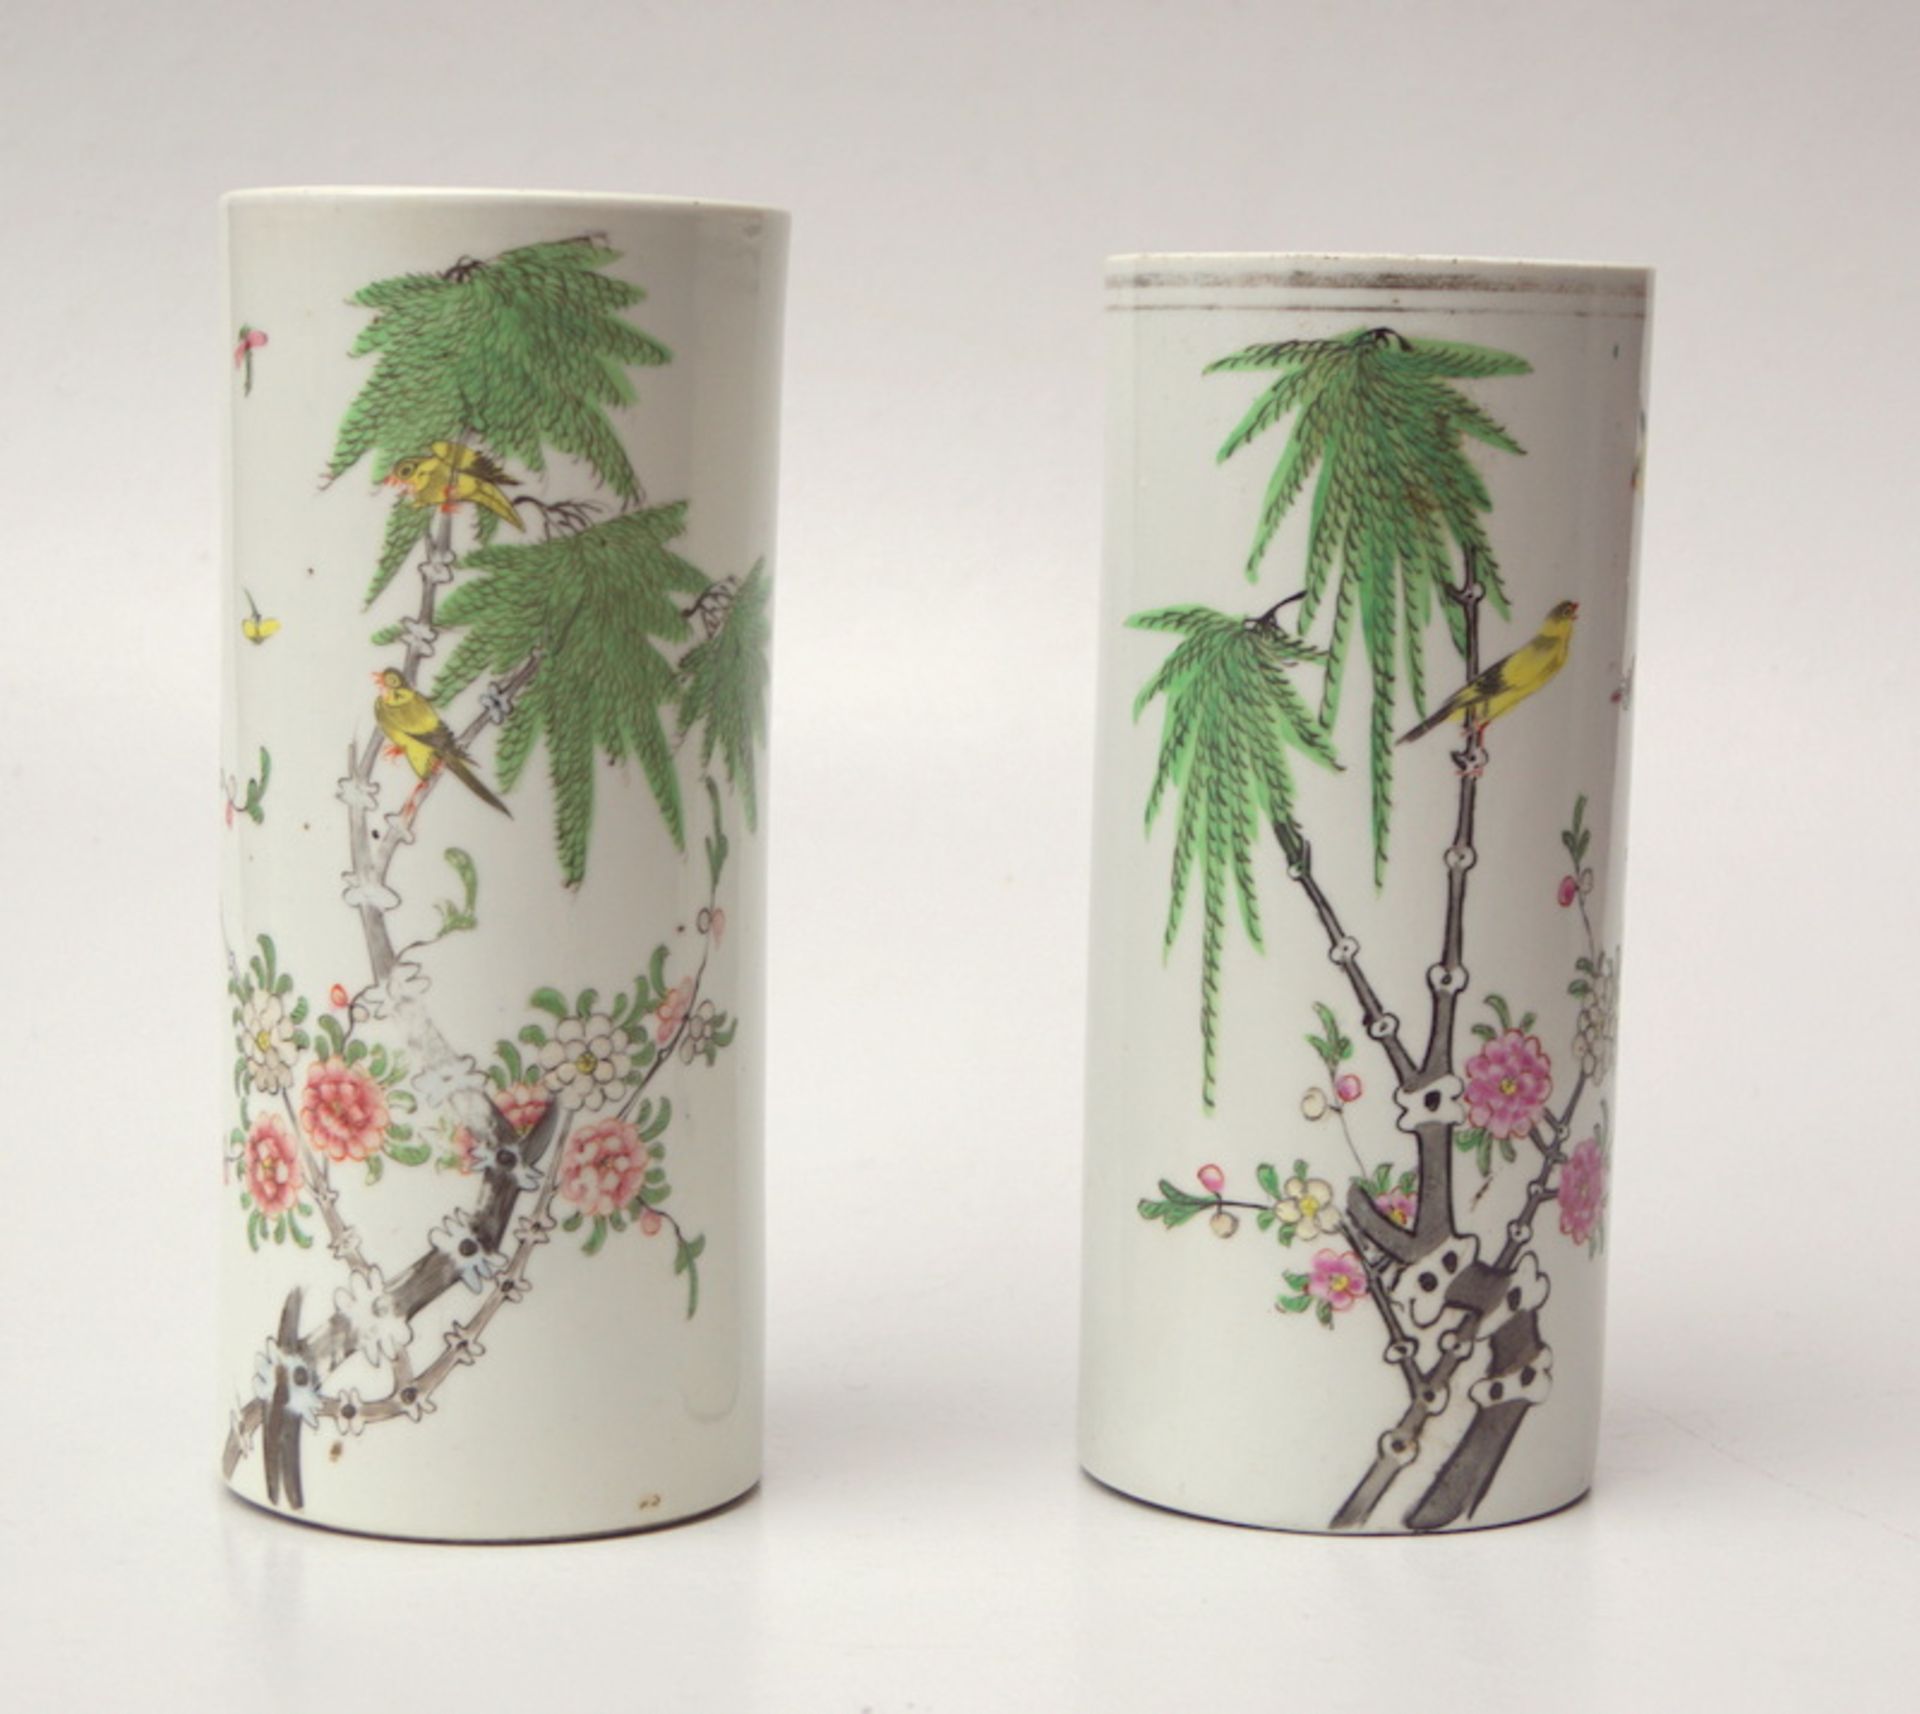 Zwei Rolleau-Vasen, China, Republic